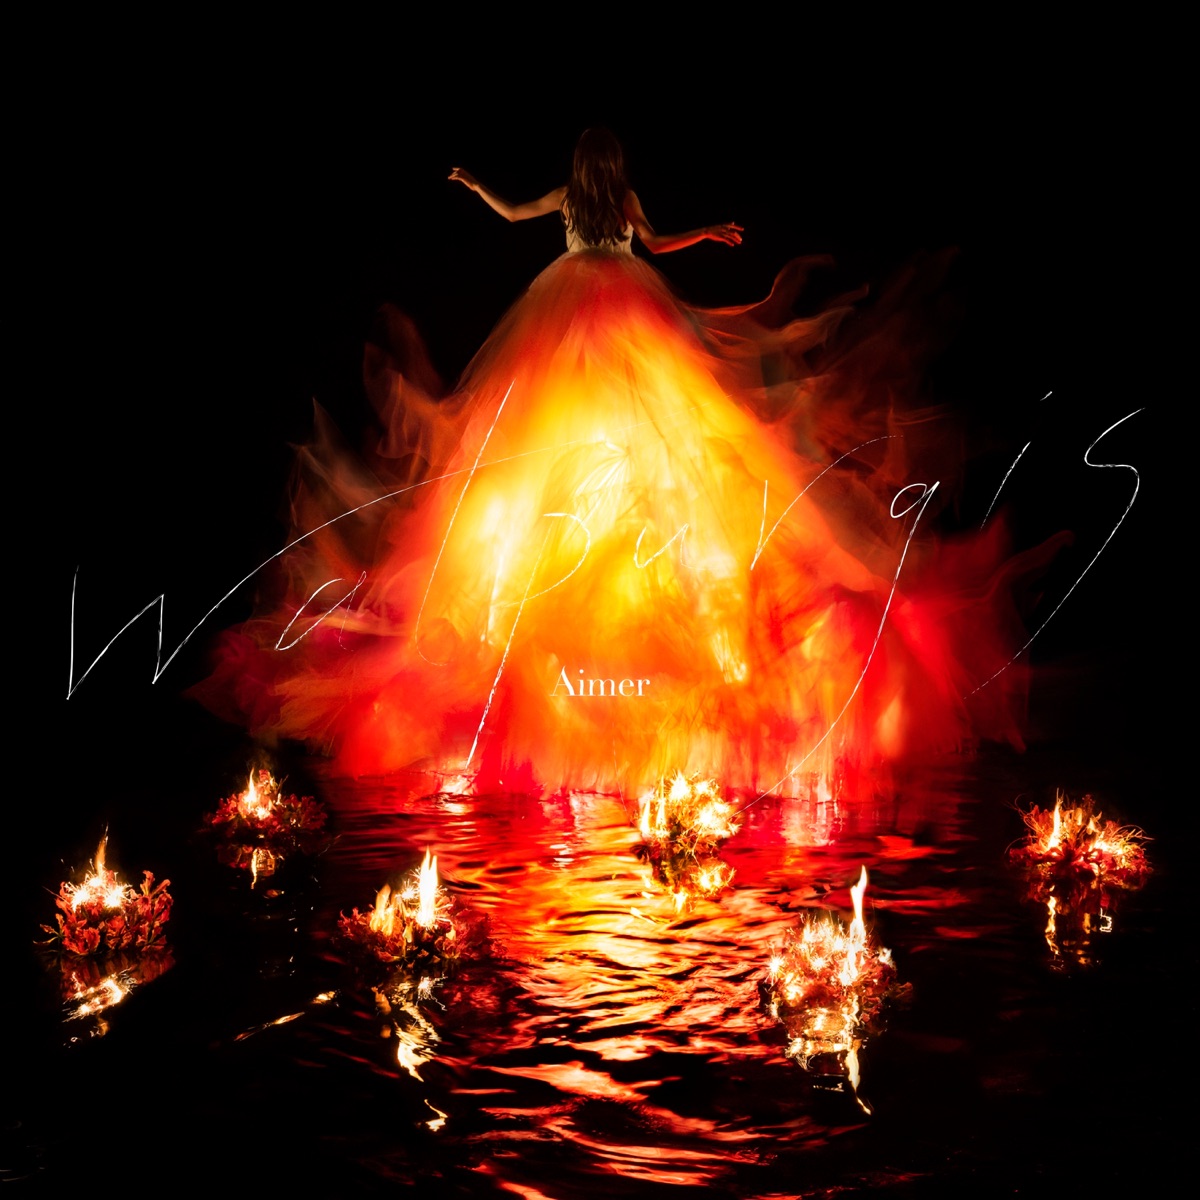 Cover art for『Aimer - Kiro』from the release『Walpurgis』